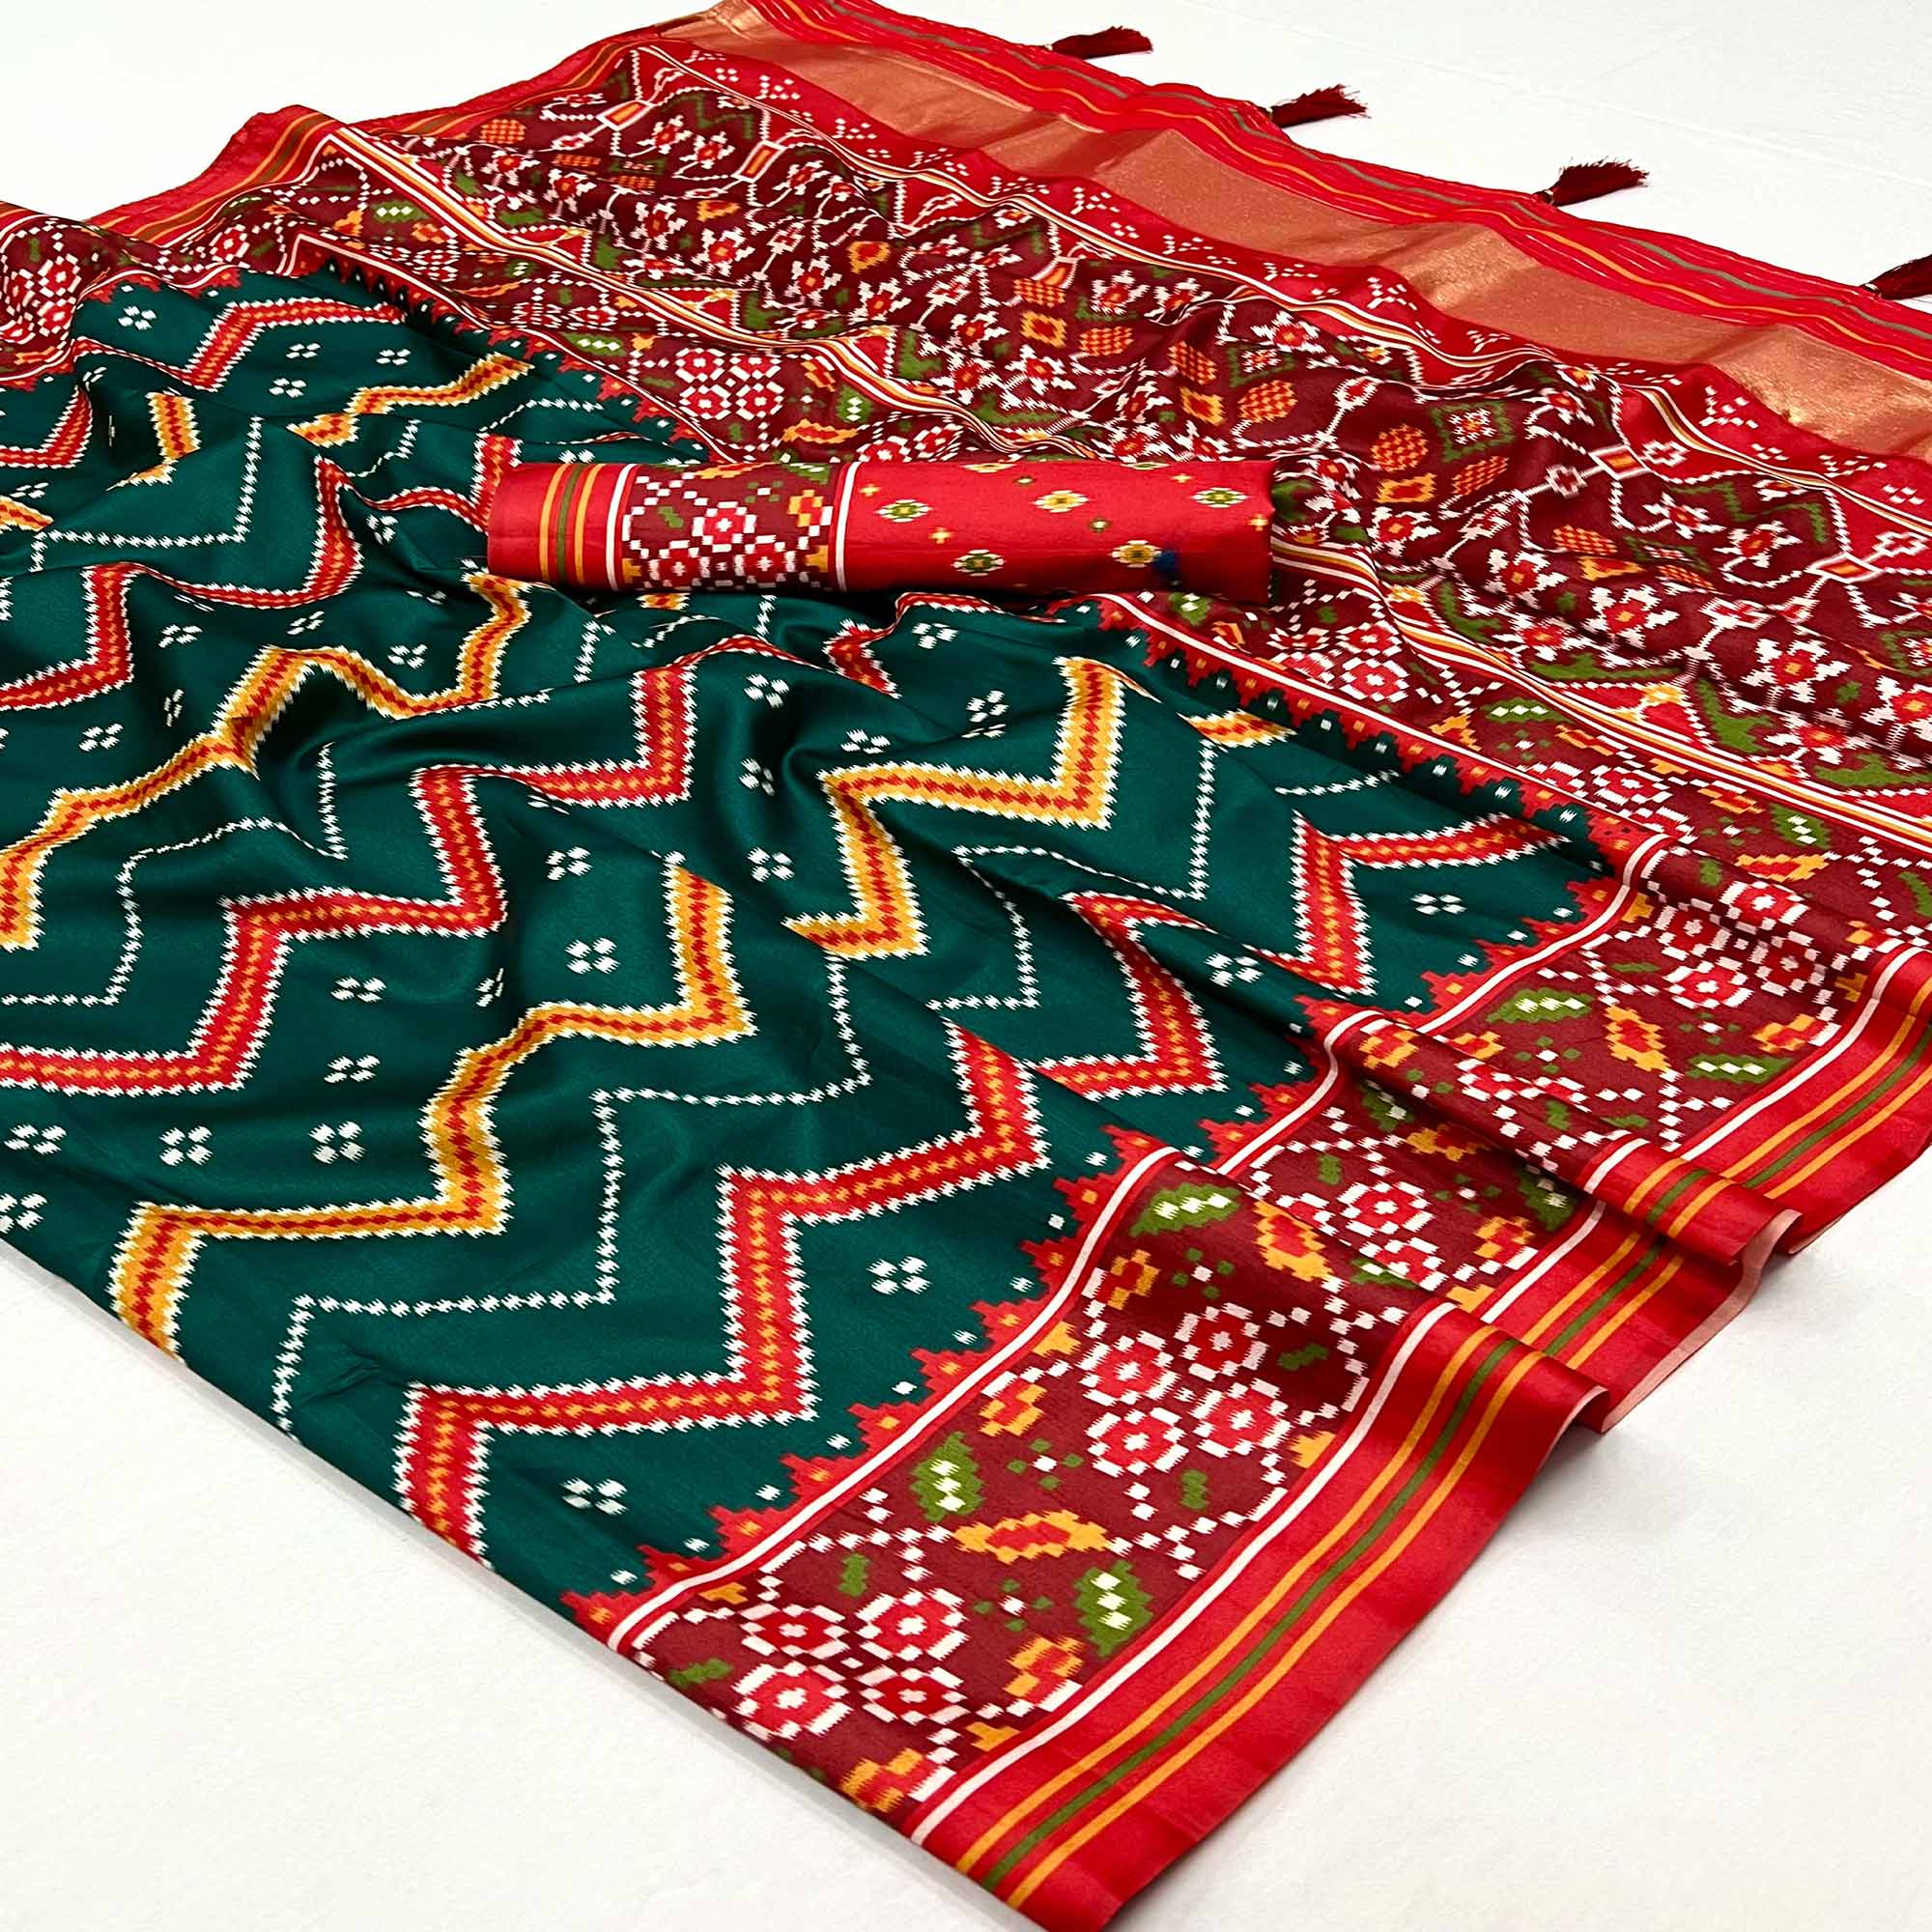 Teal Green Patola Printed Tussar Silk Saree With Tassels